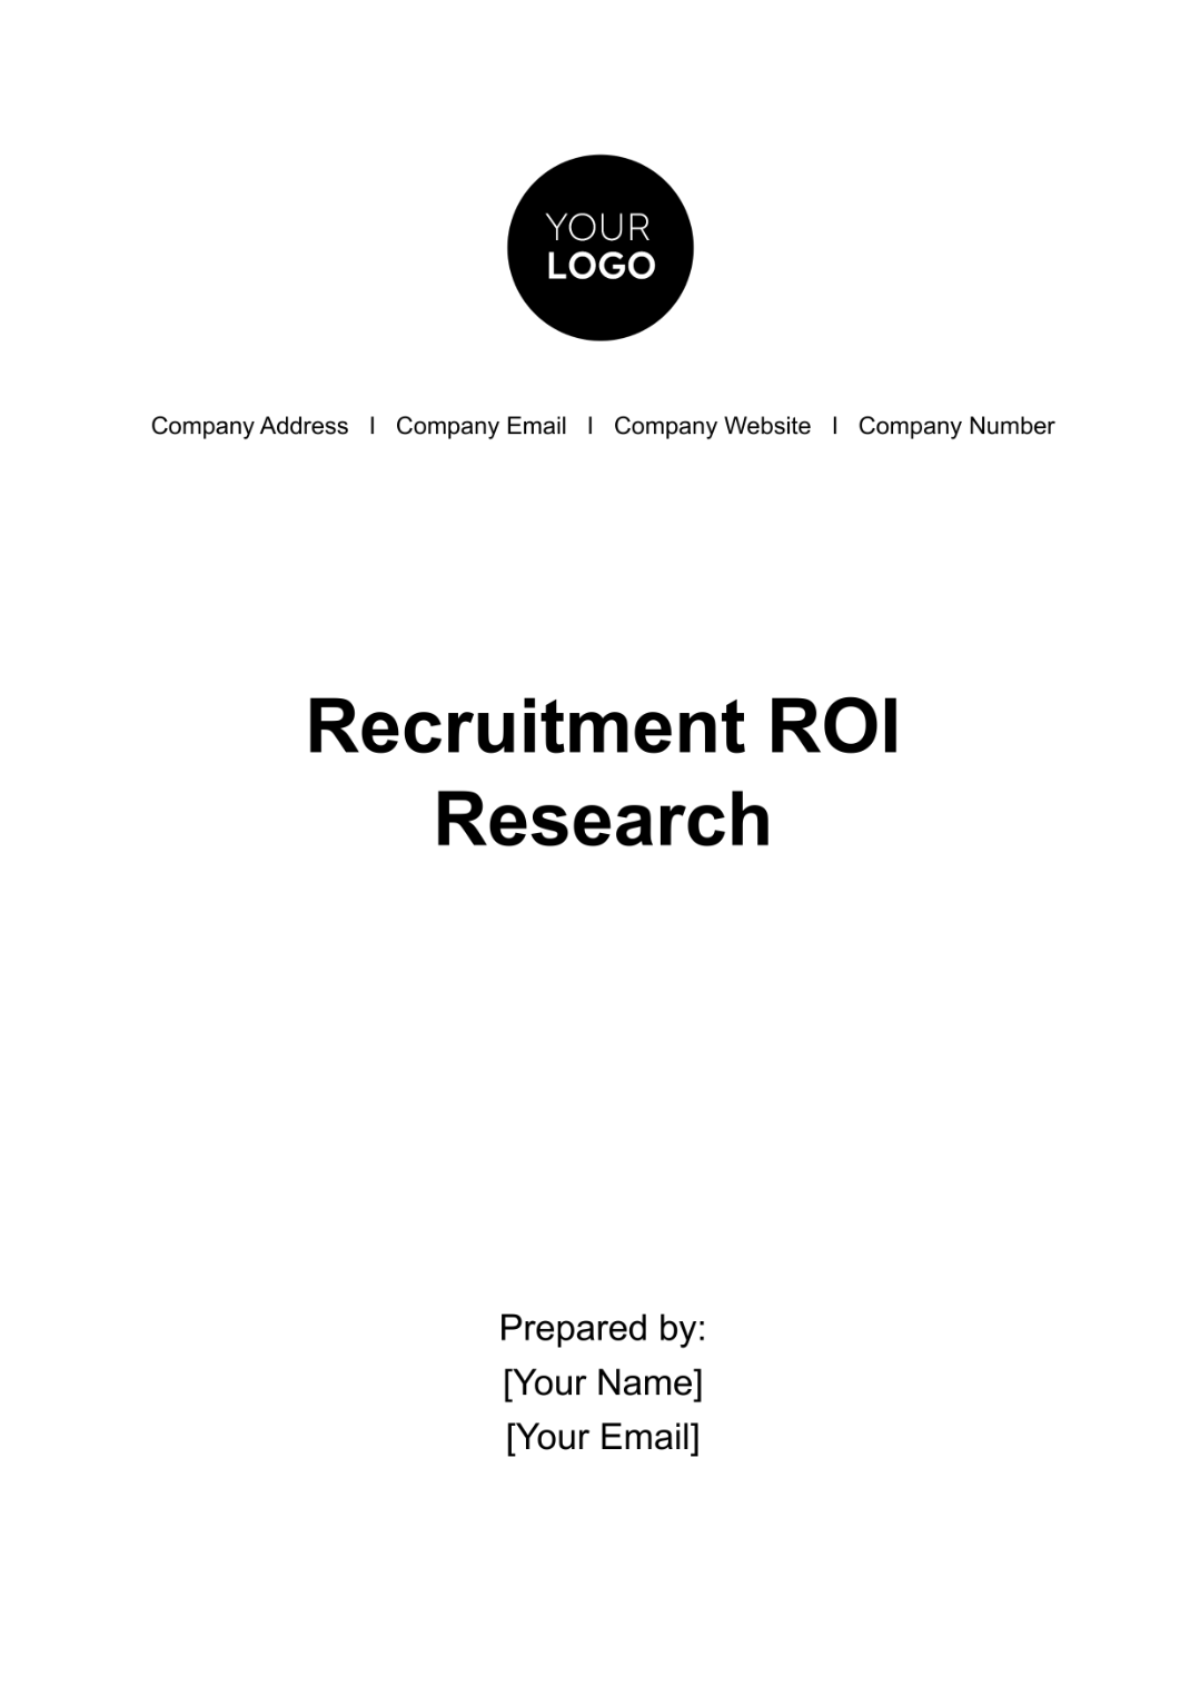 Free Recruitment ROI Research HR Template